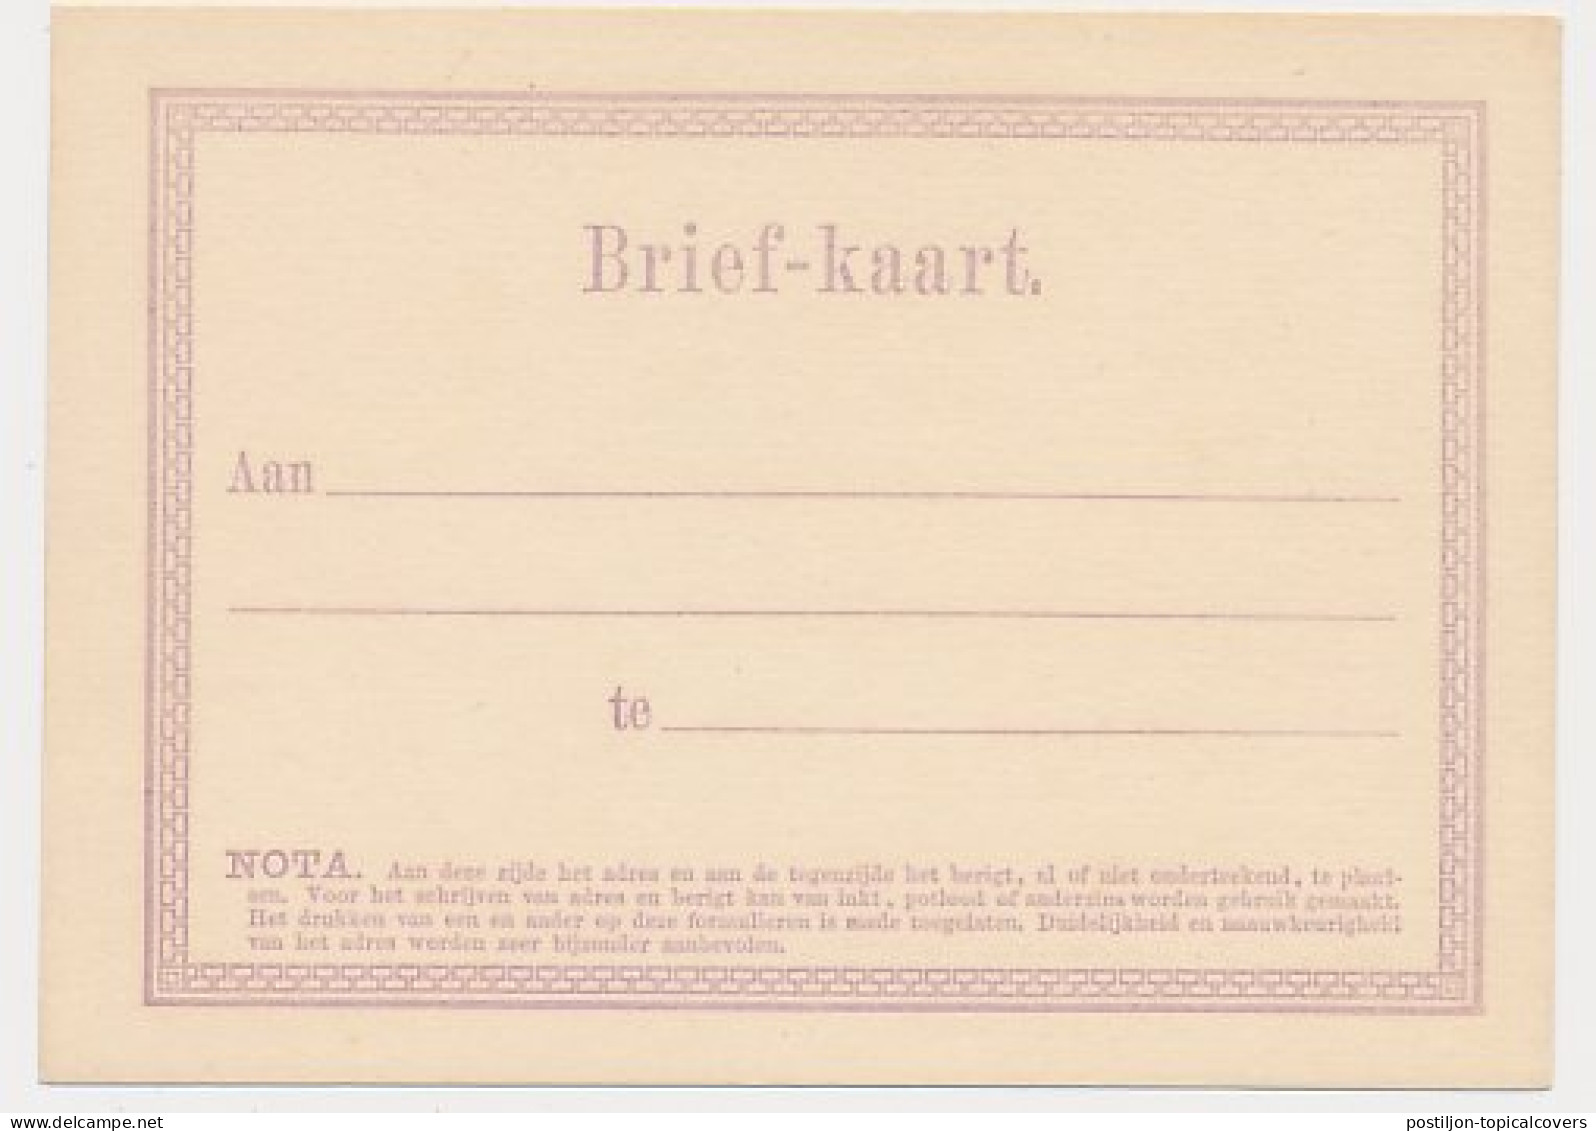 Briefkaart Formulier G. I - Postal Stationery